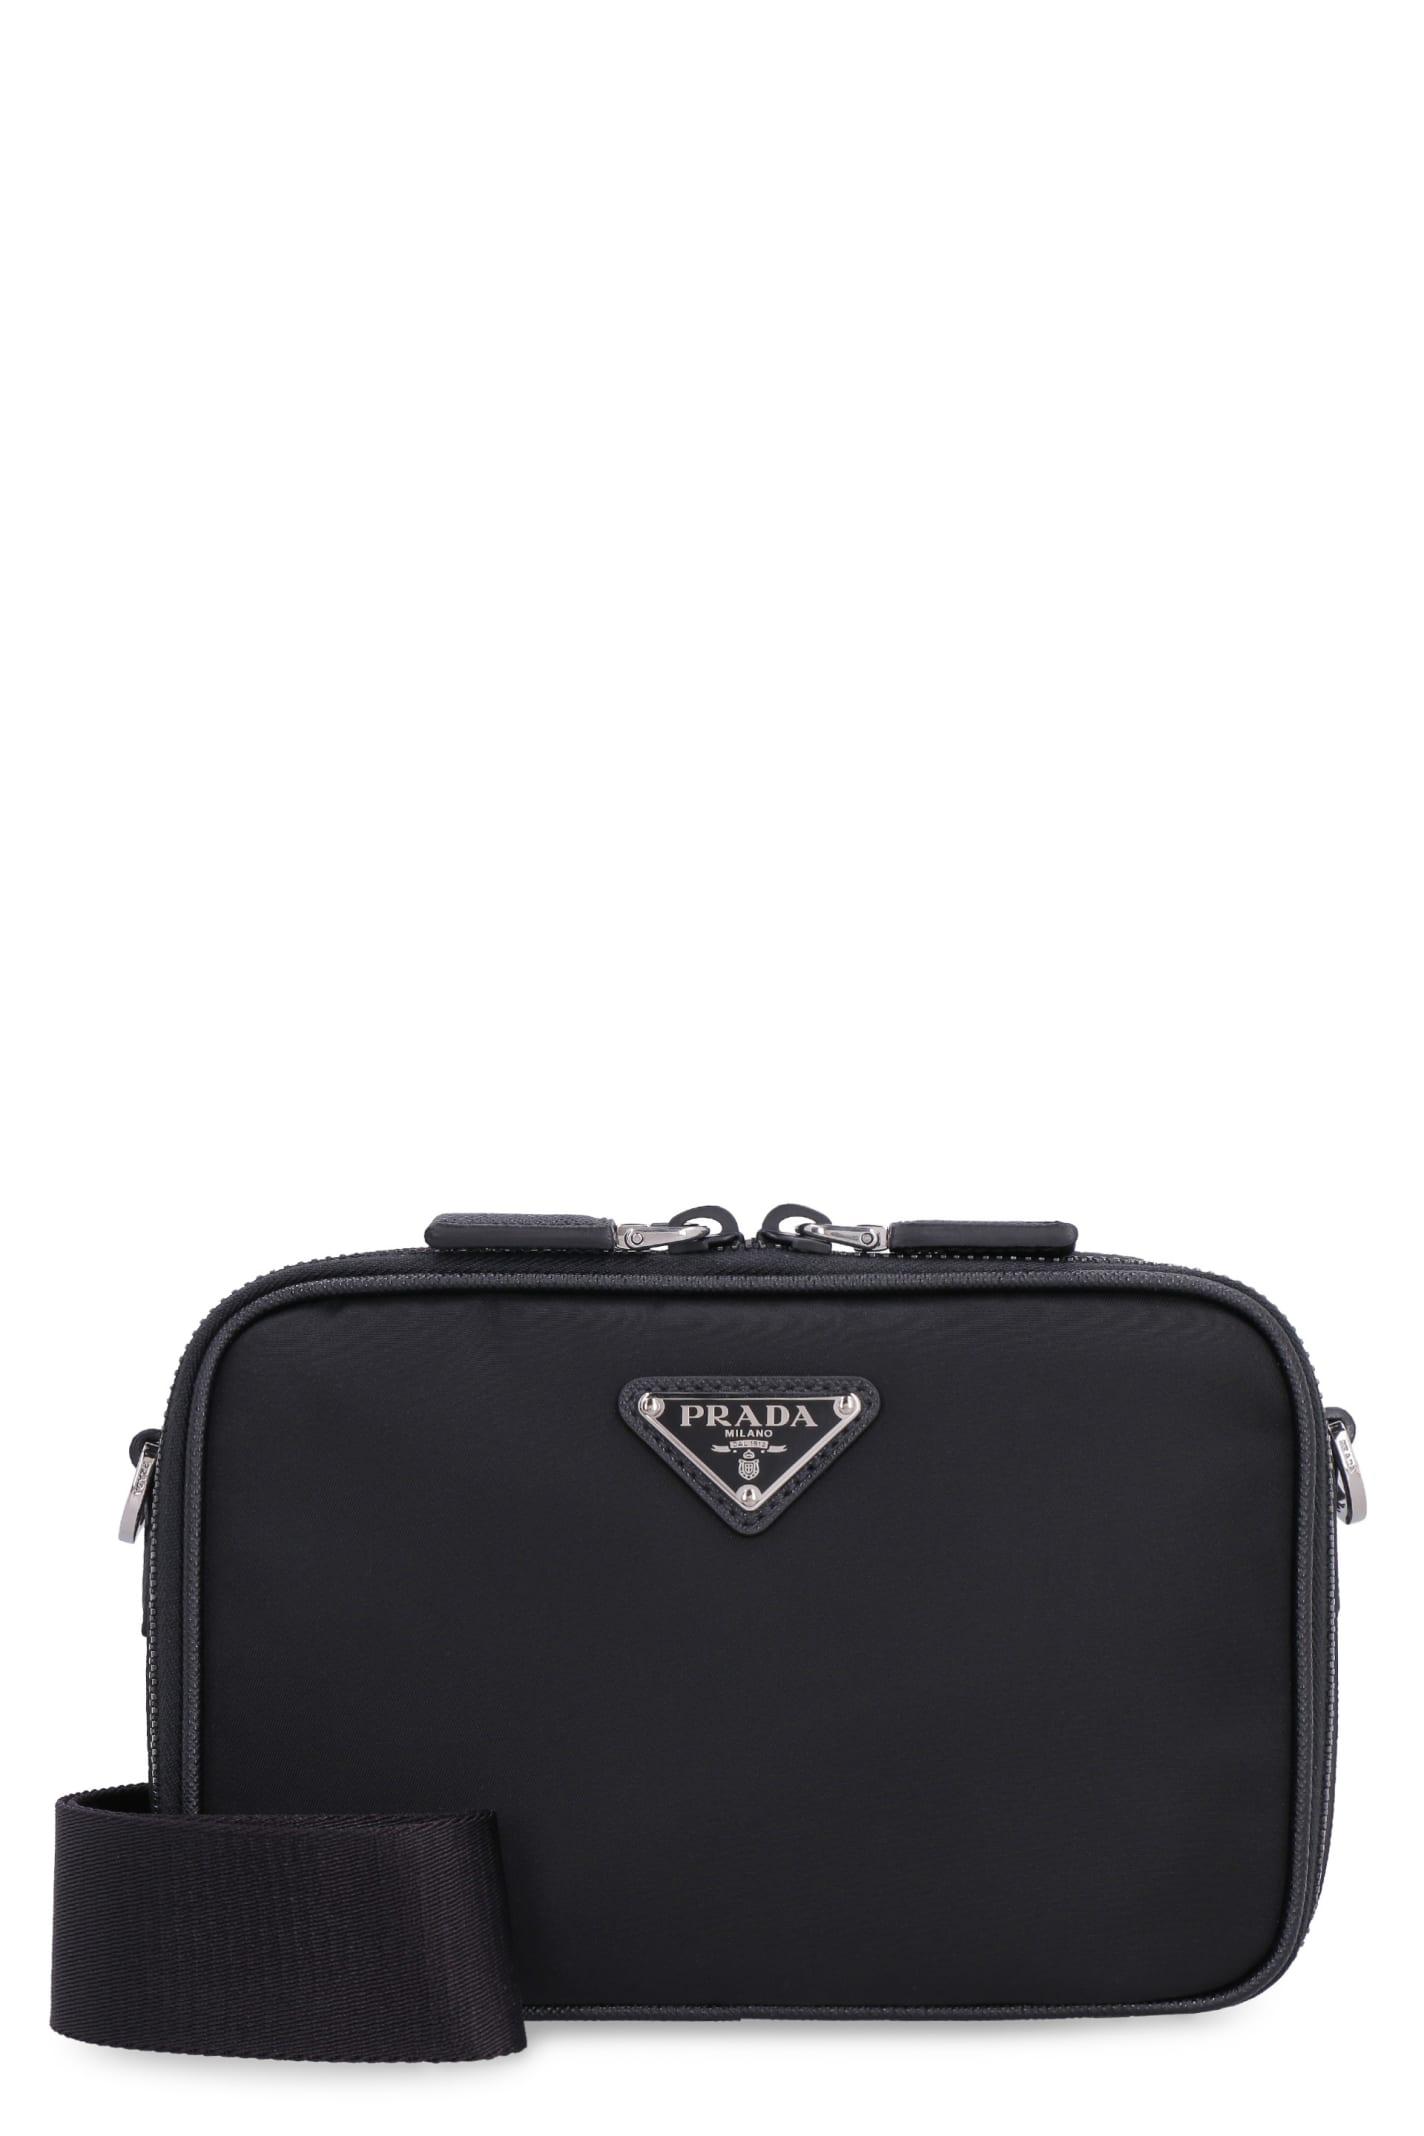 Prada Brique Leather And Nylon Messenger Bag in Black for Men | Lyst